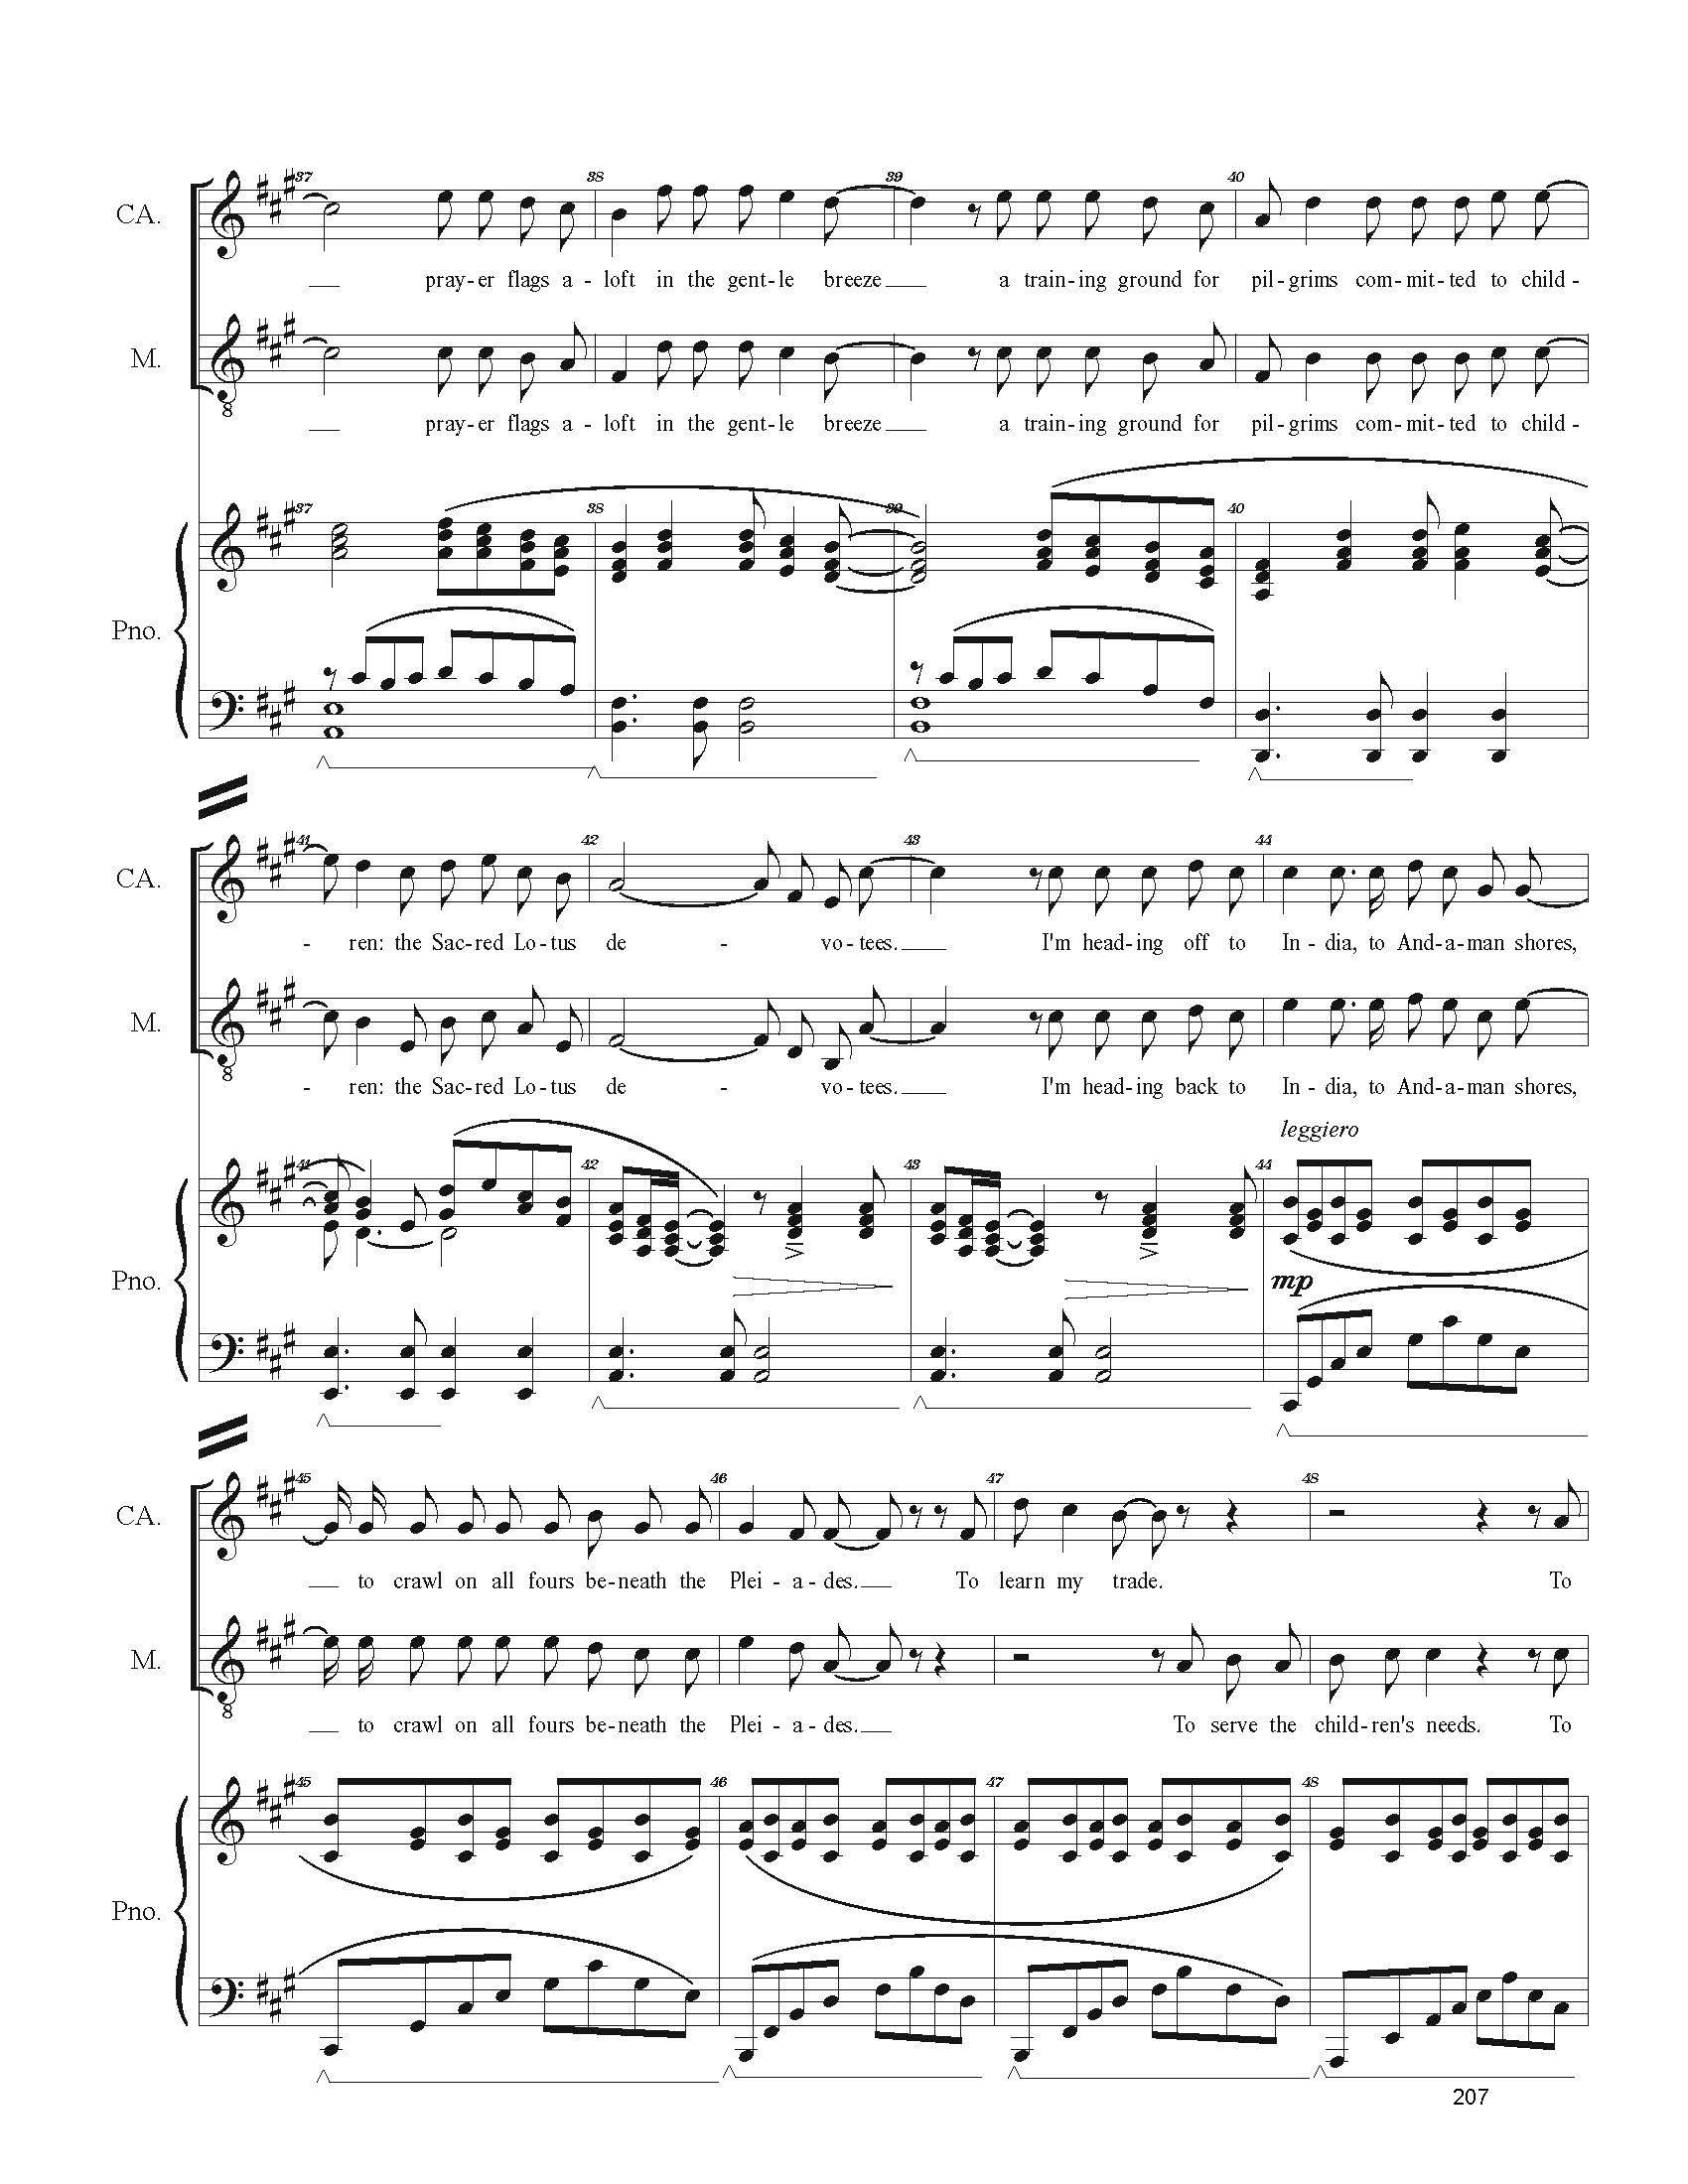 FULL PIANO VOCAL SCORE DRAFT 1 - Score_Page_207.jpg